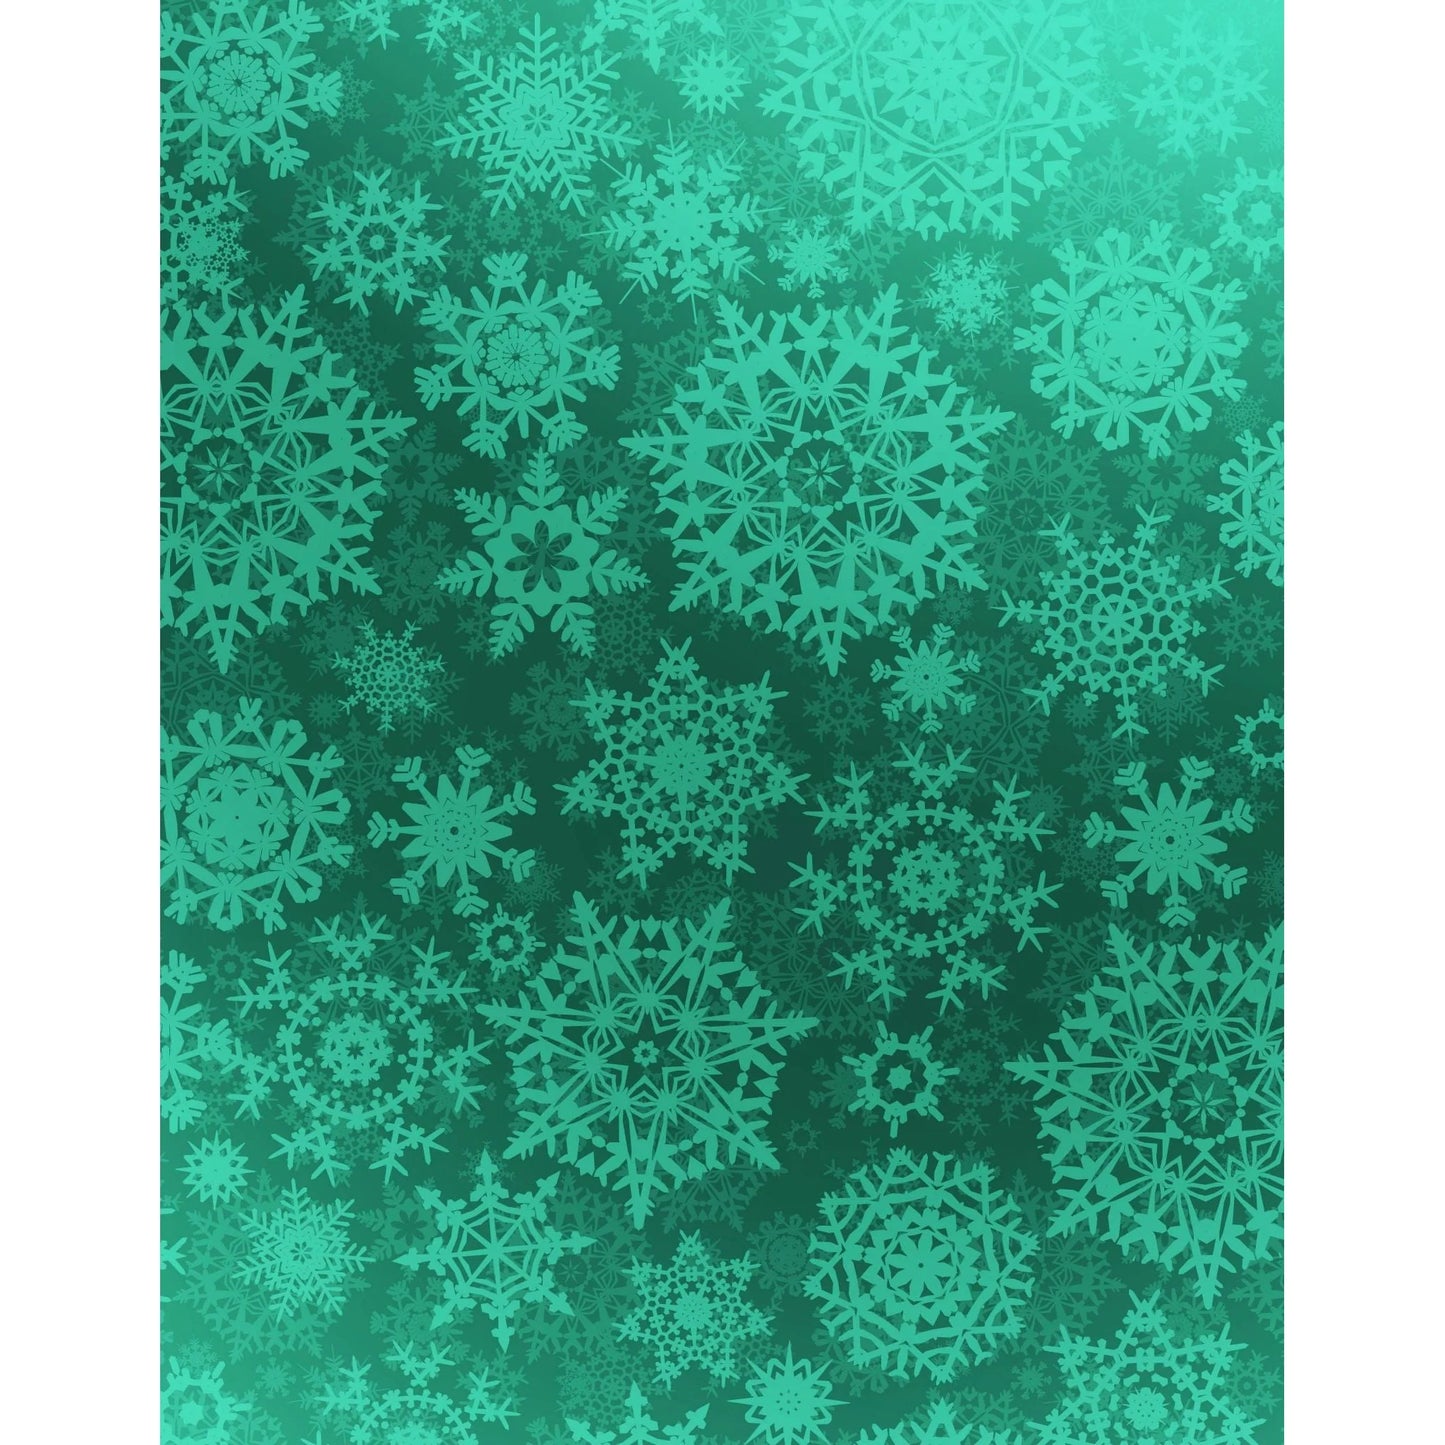 Skies of Snowflakes Fabulous Foiling Toner Cardstock  - Picket Fence Studios